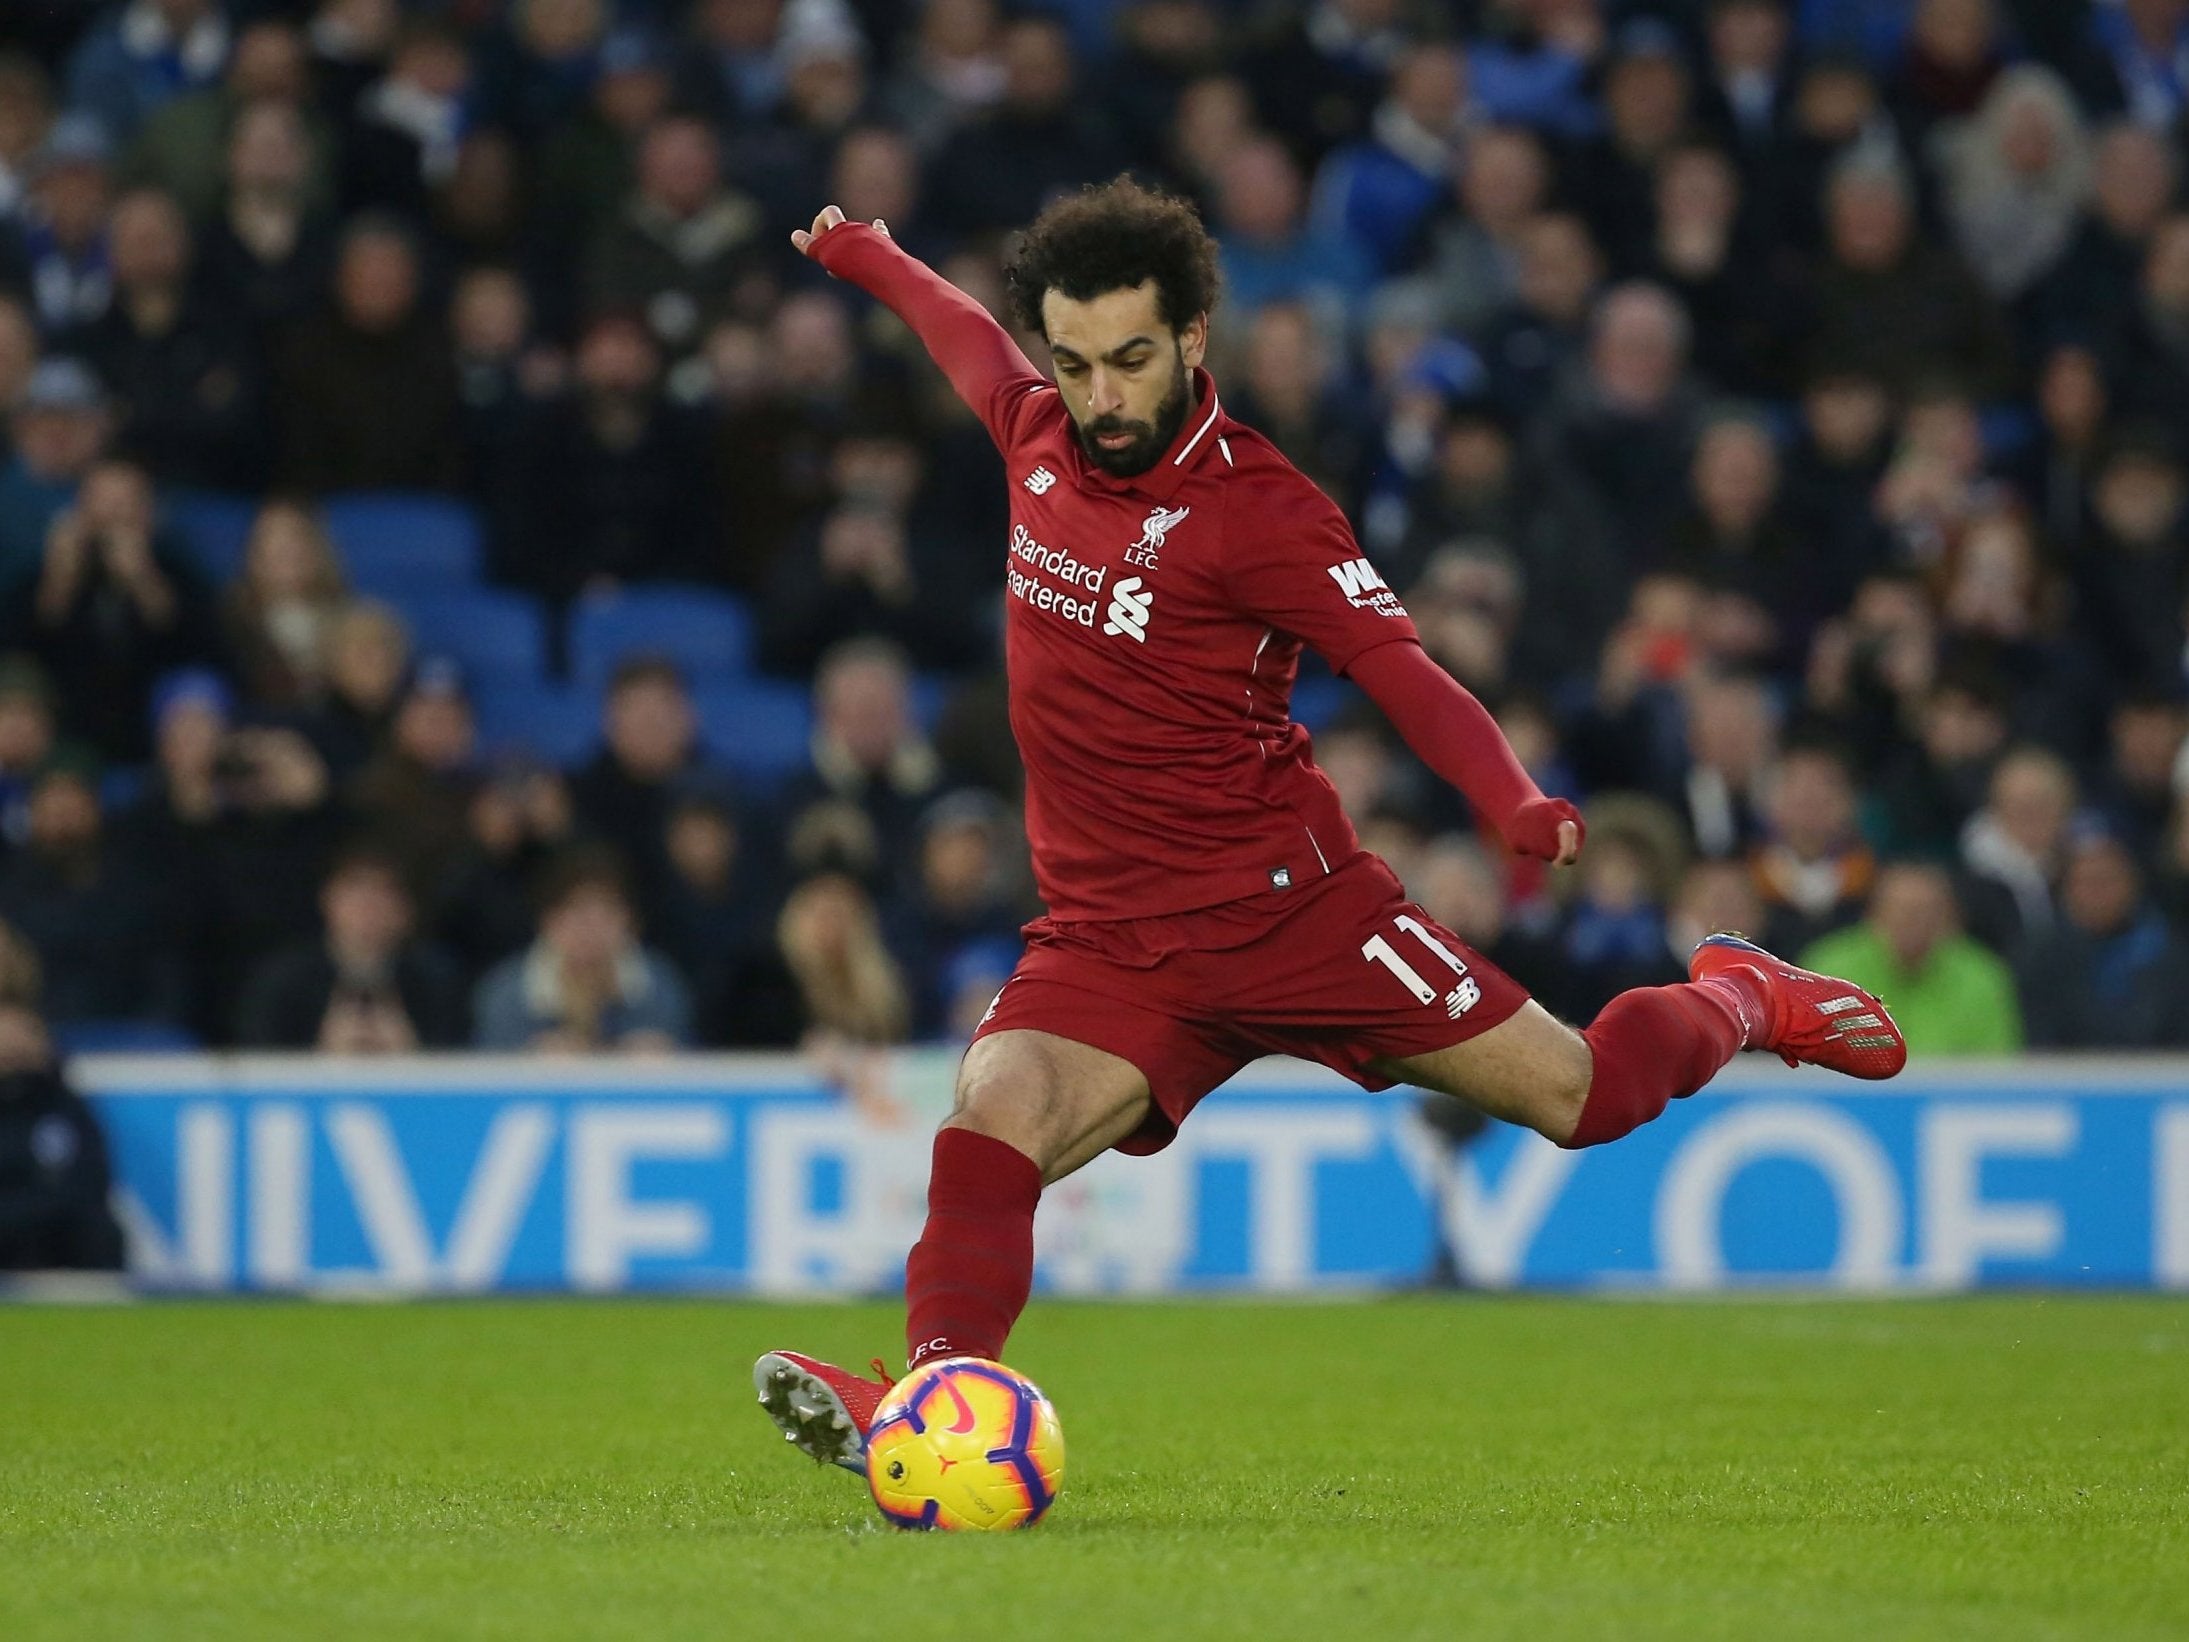 Mohamed Salah strikes his penalty effort as he scores for Liverpool